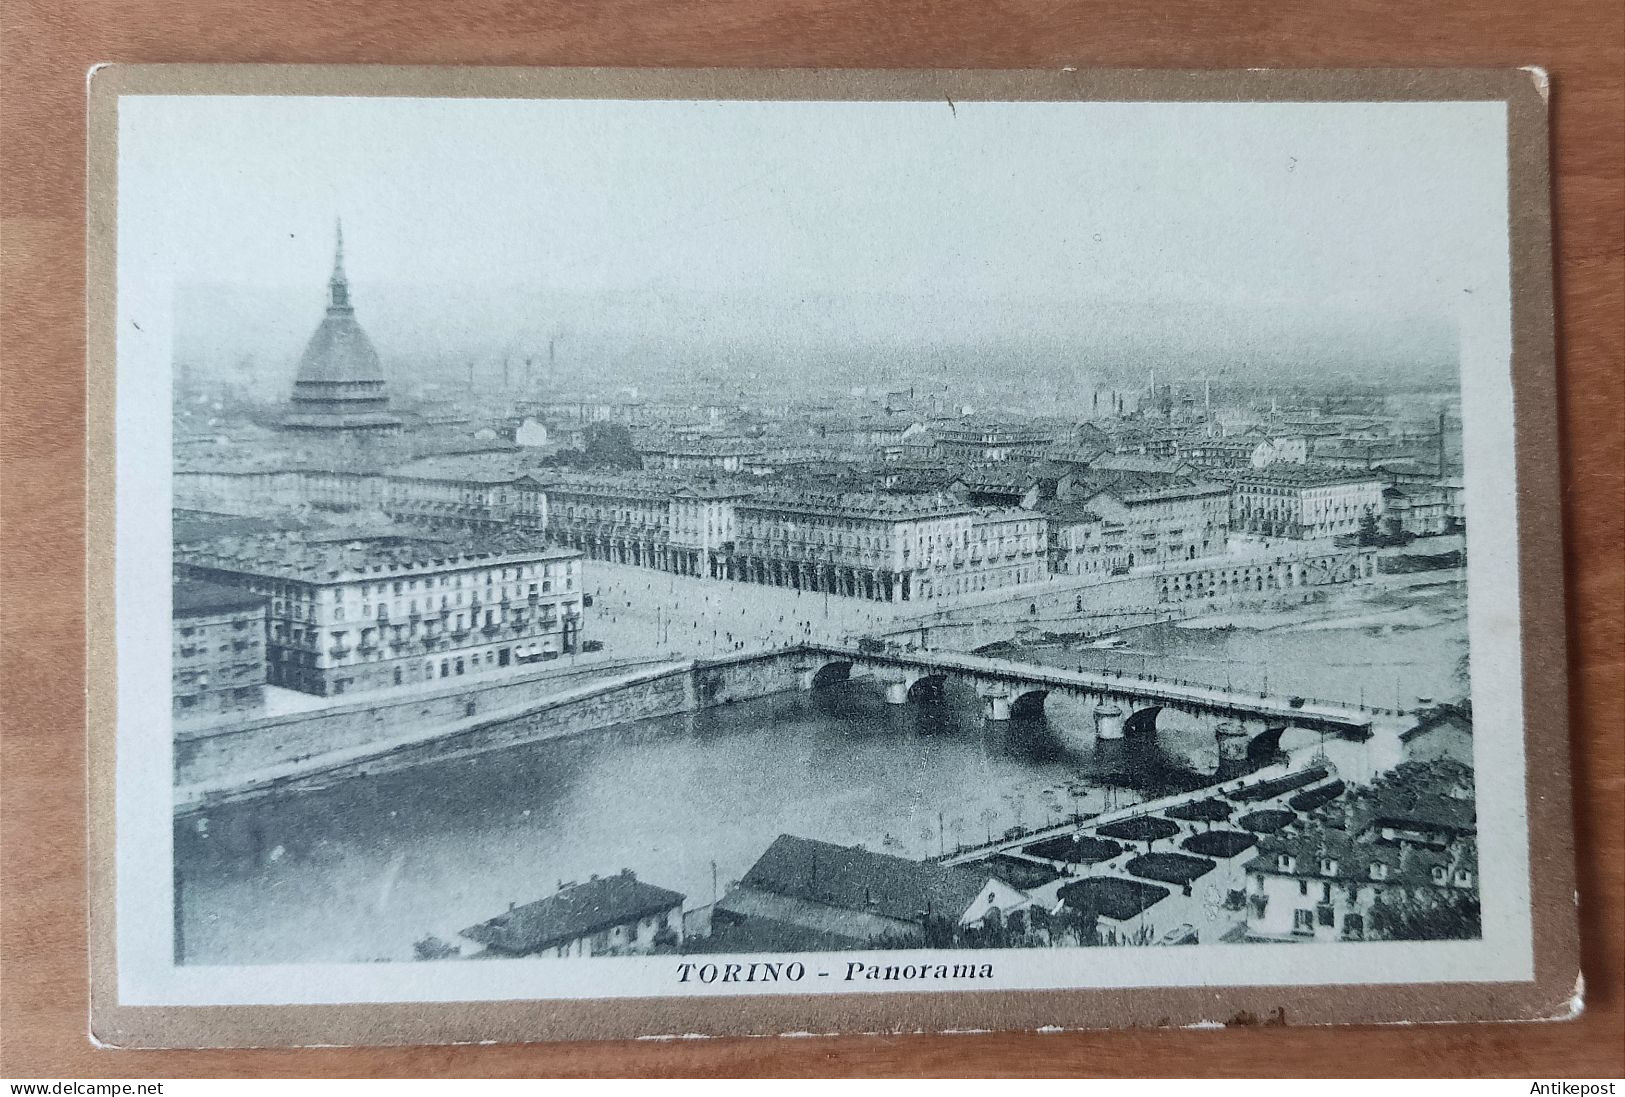 Torino,Panorama - Mehransichten, Panoramakarten